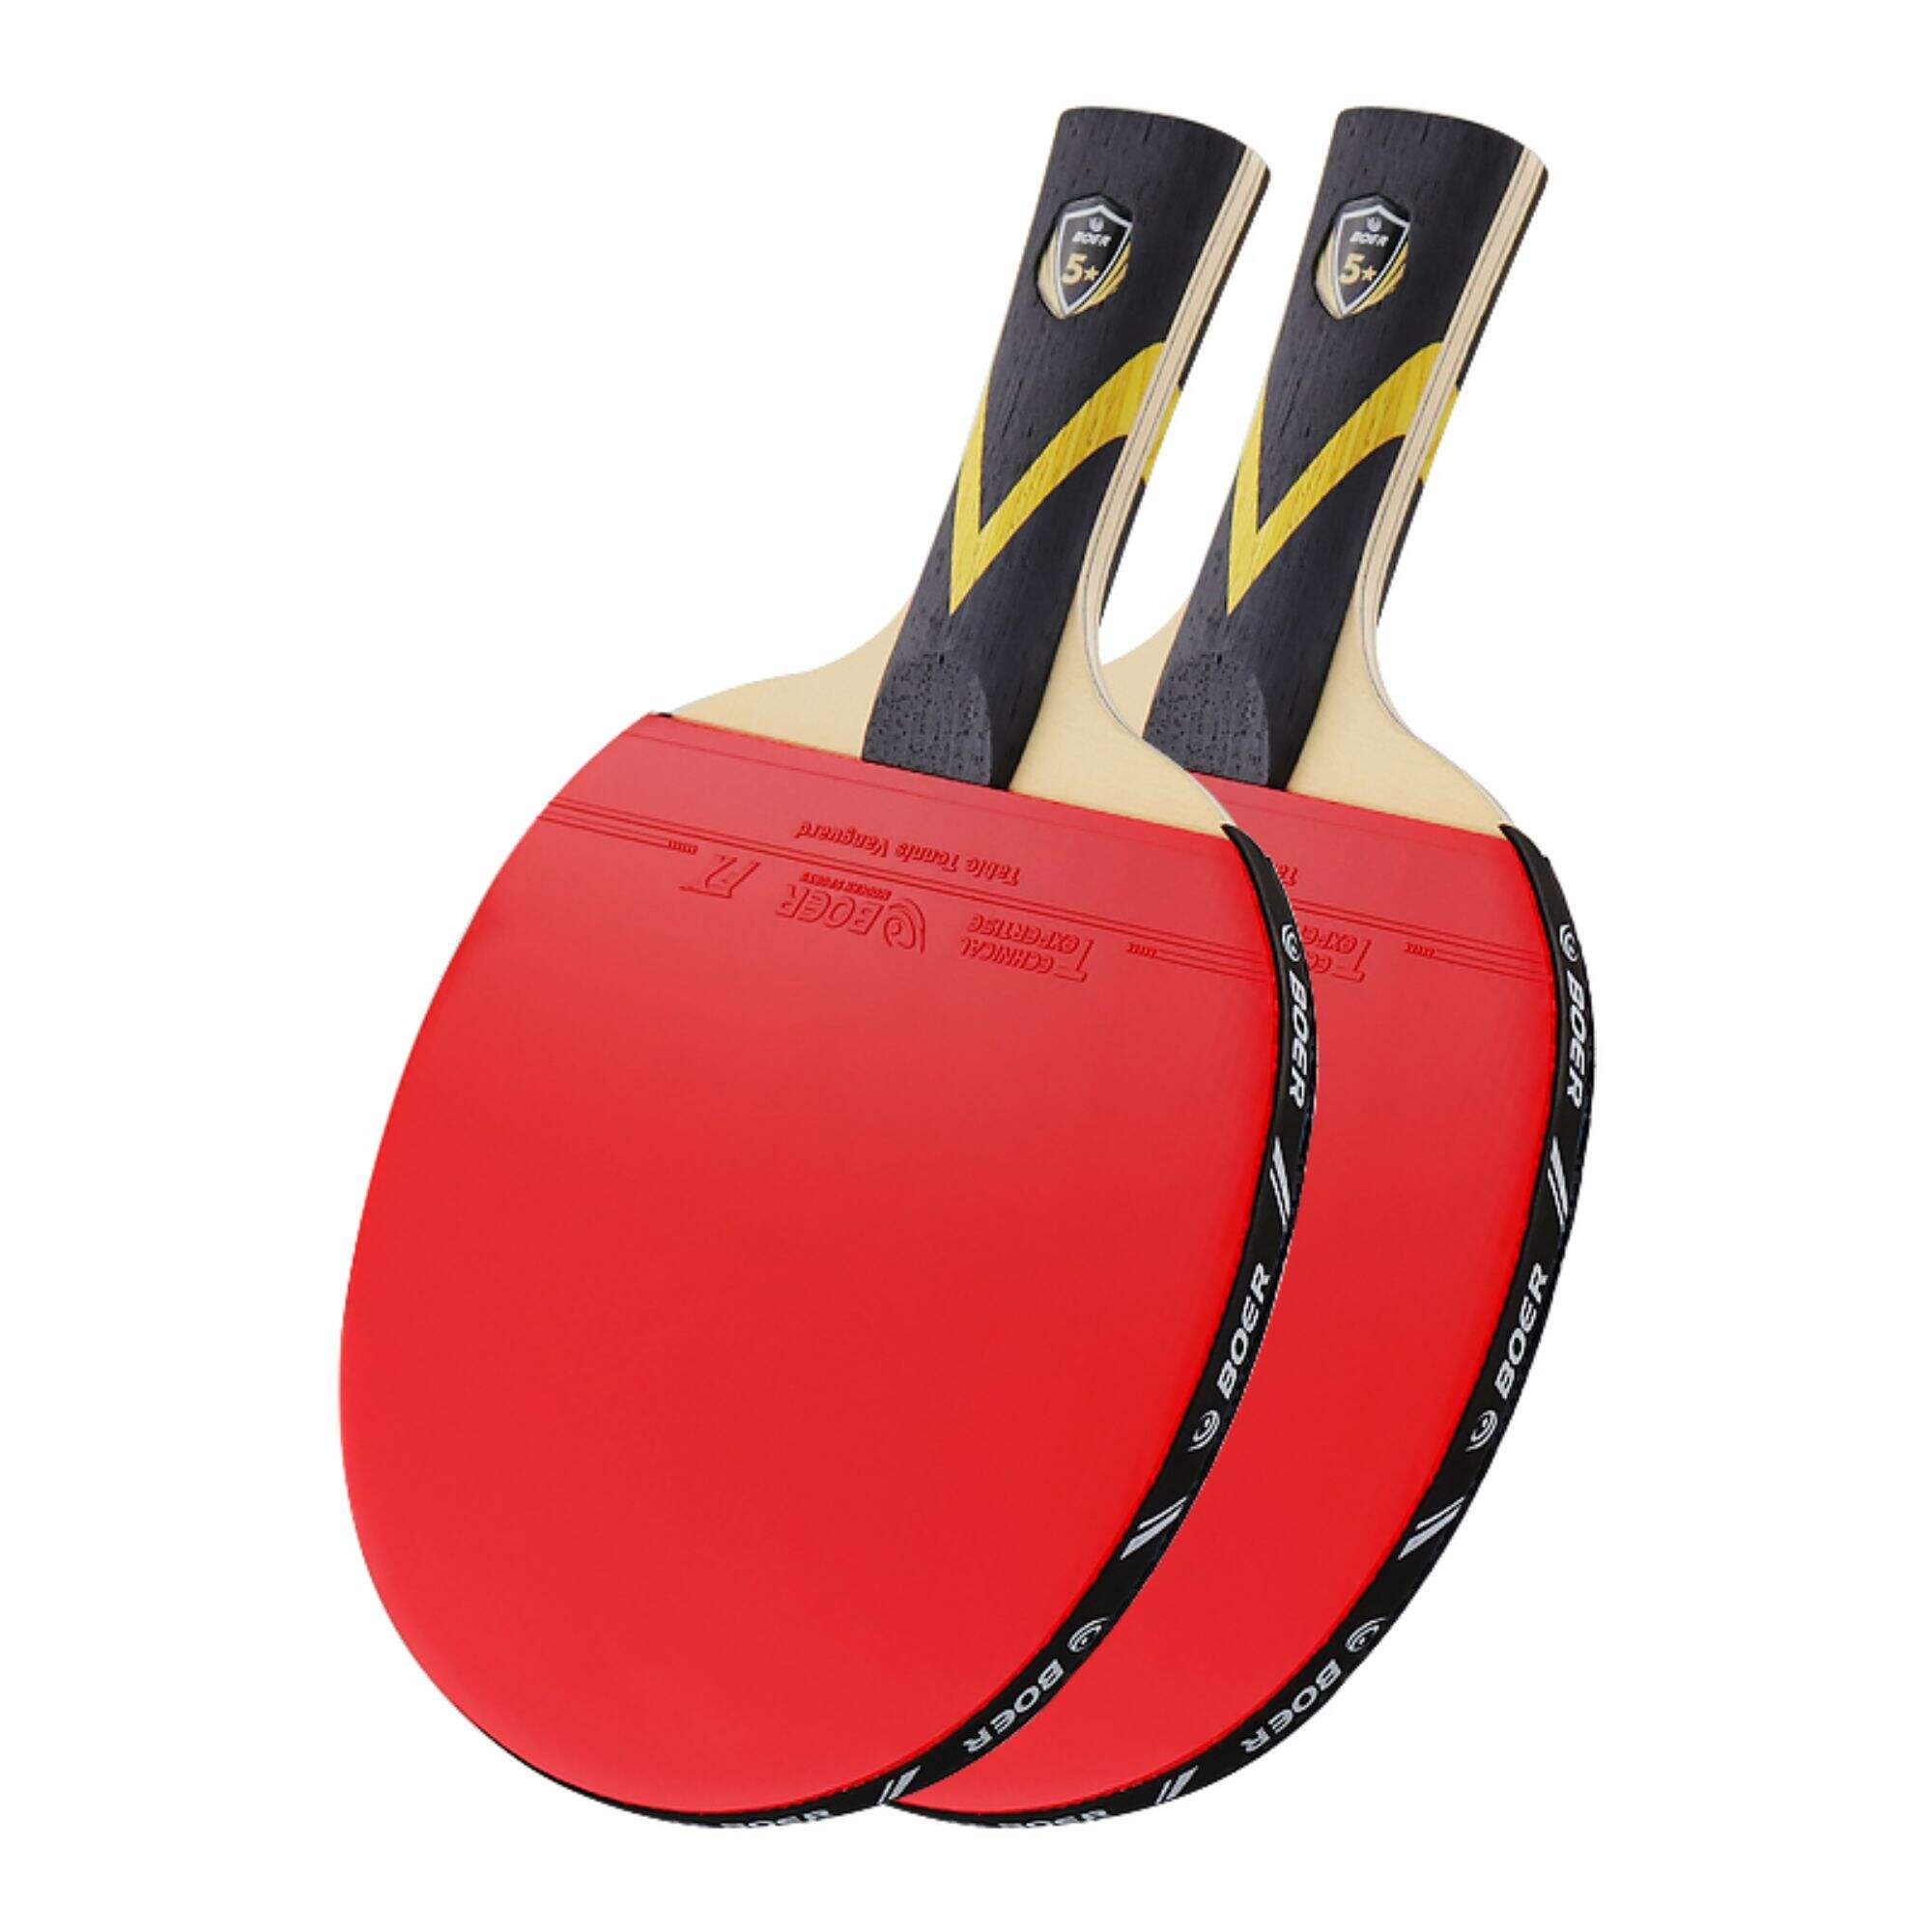 Boer 5star Professional Table Tennis Rakcet/Bat/Paddle